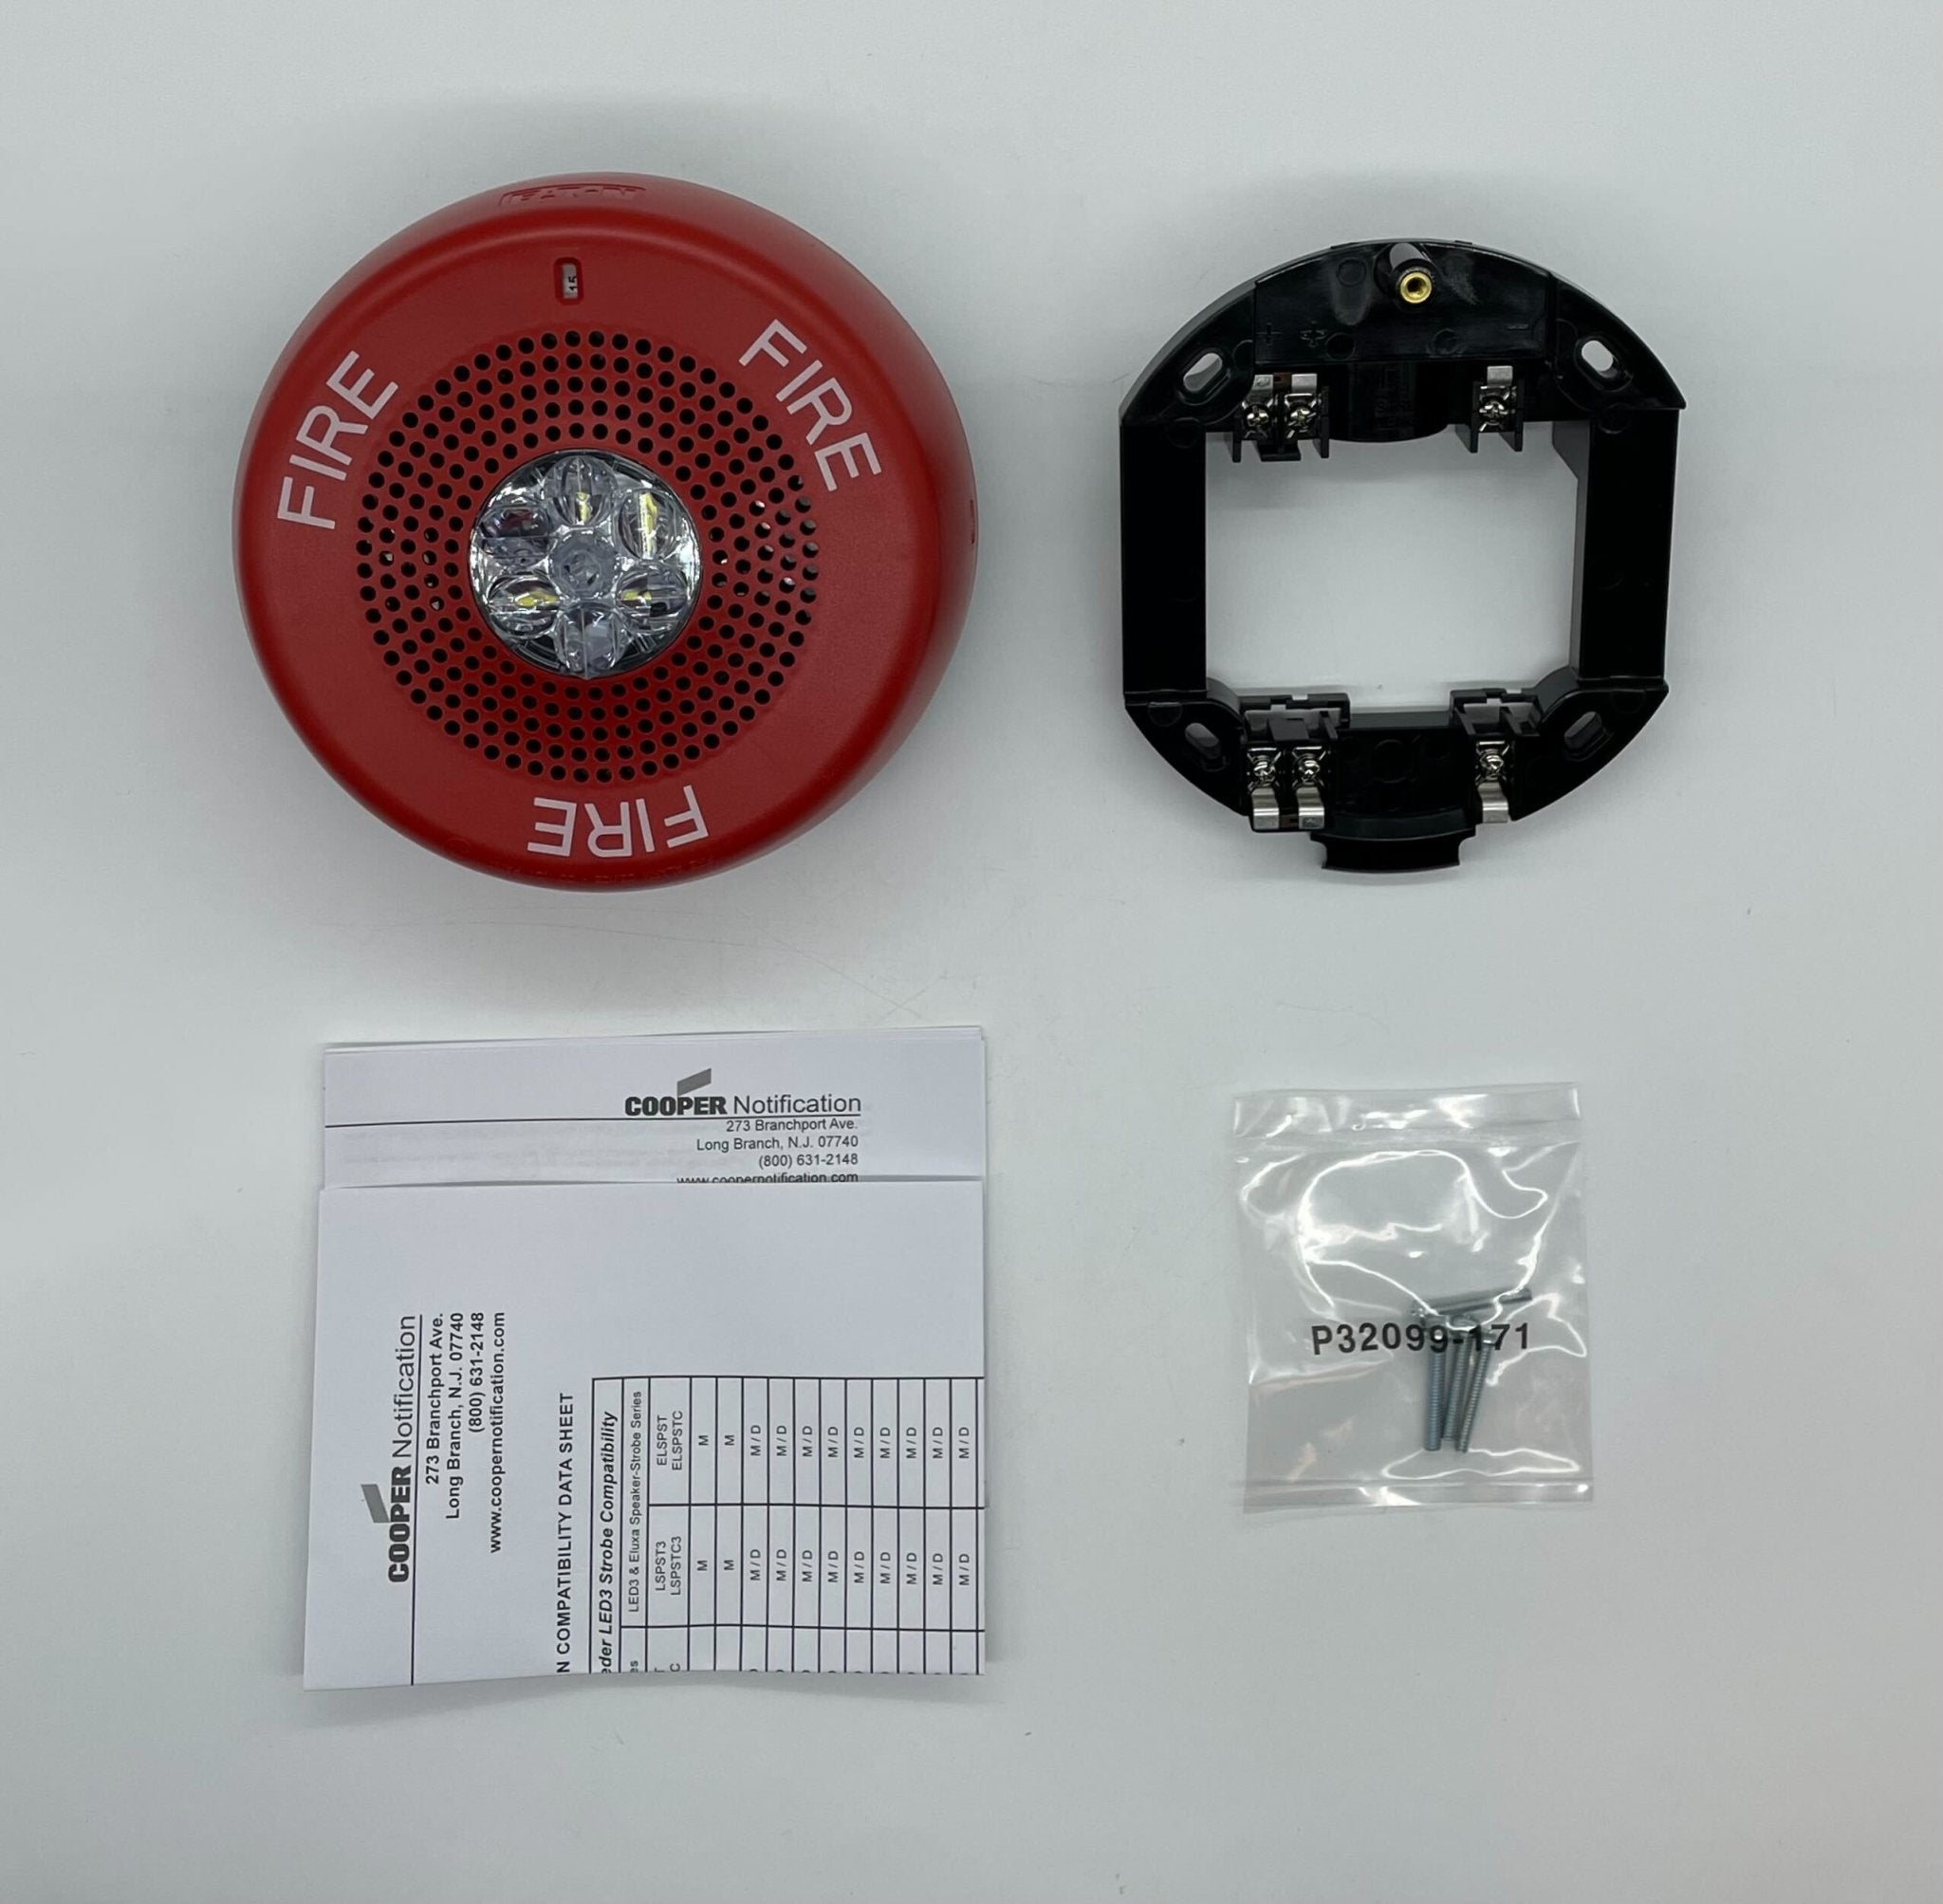 Wheelock ELSPSTRC - The Fire Alarm Supplier